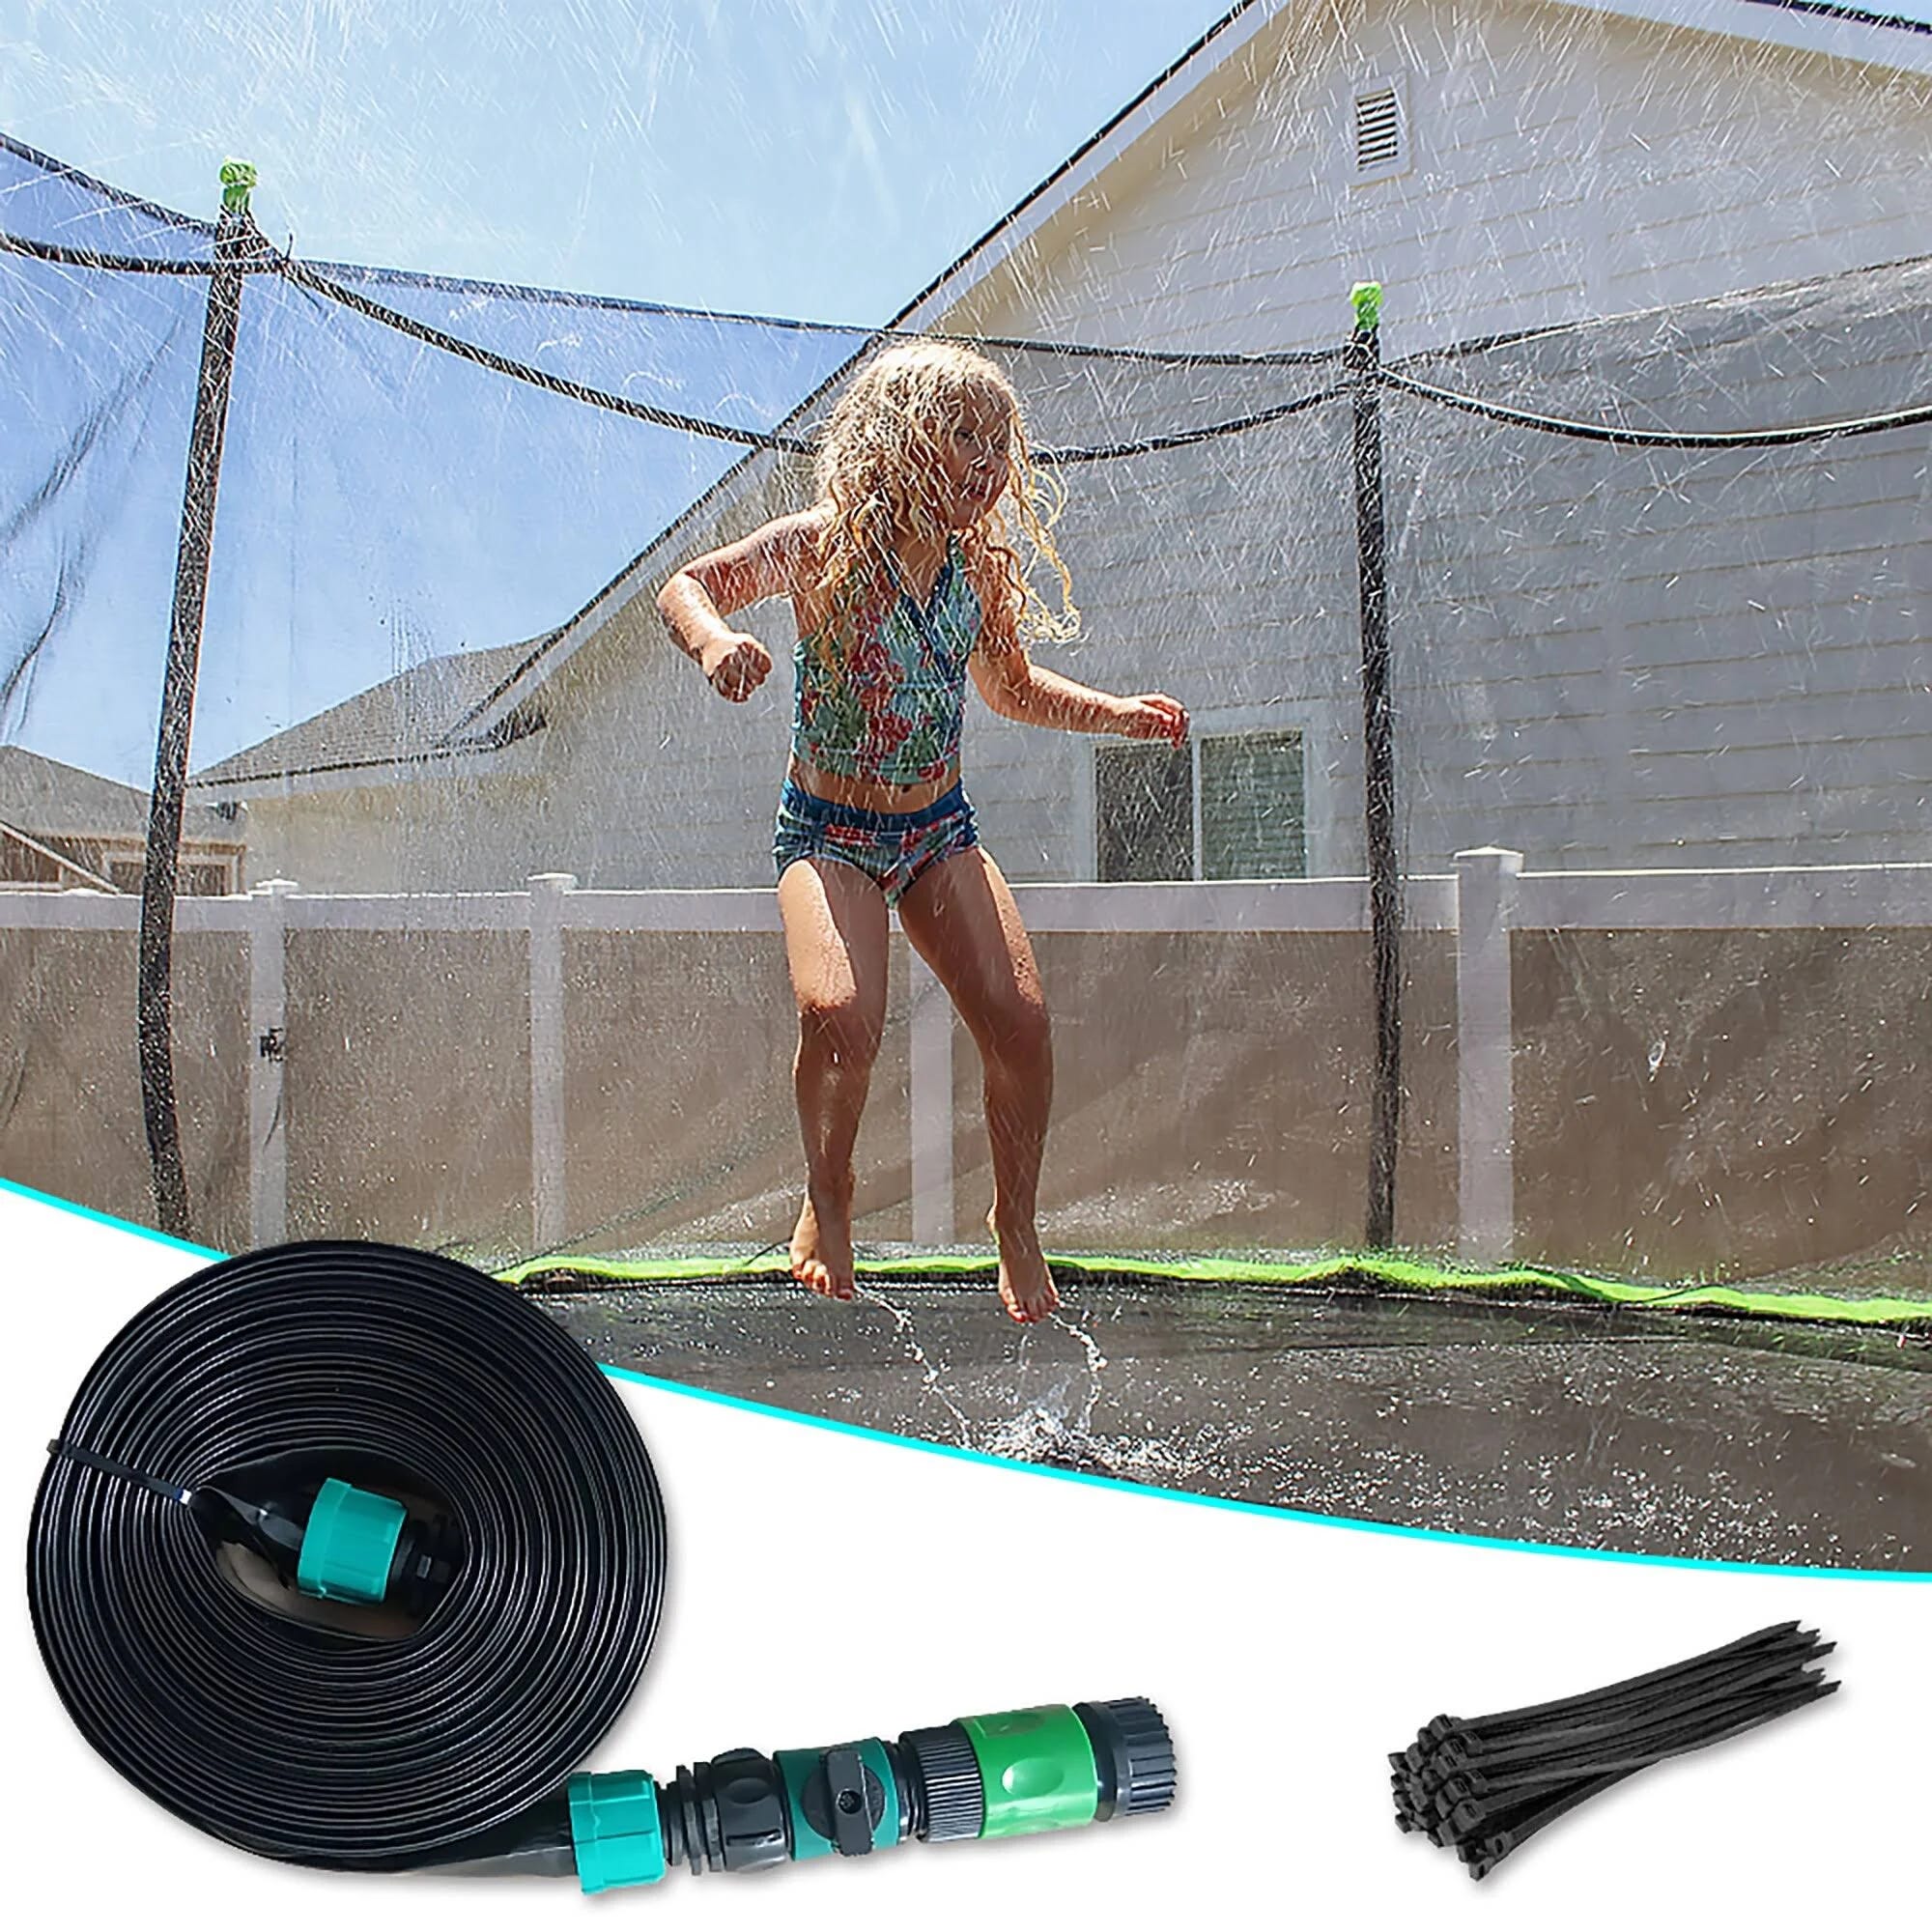 Outdoor Water Sprinkler Trampoline for Cool Summer Fun | Image